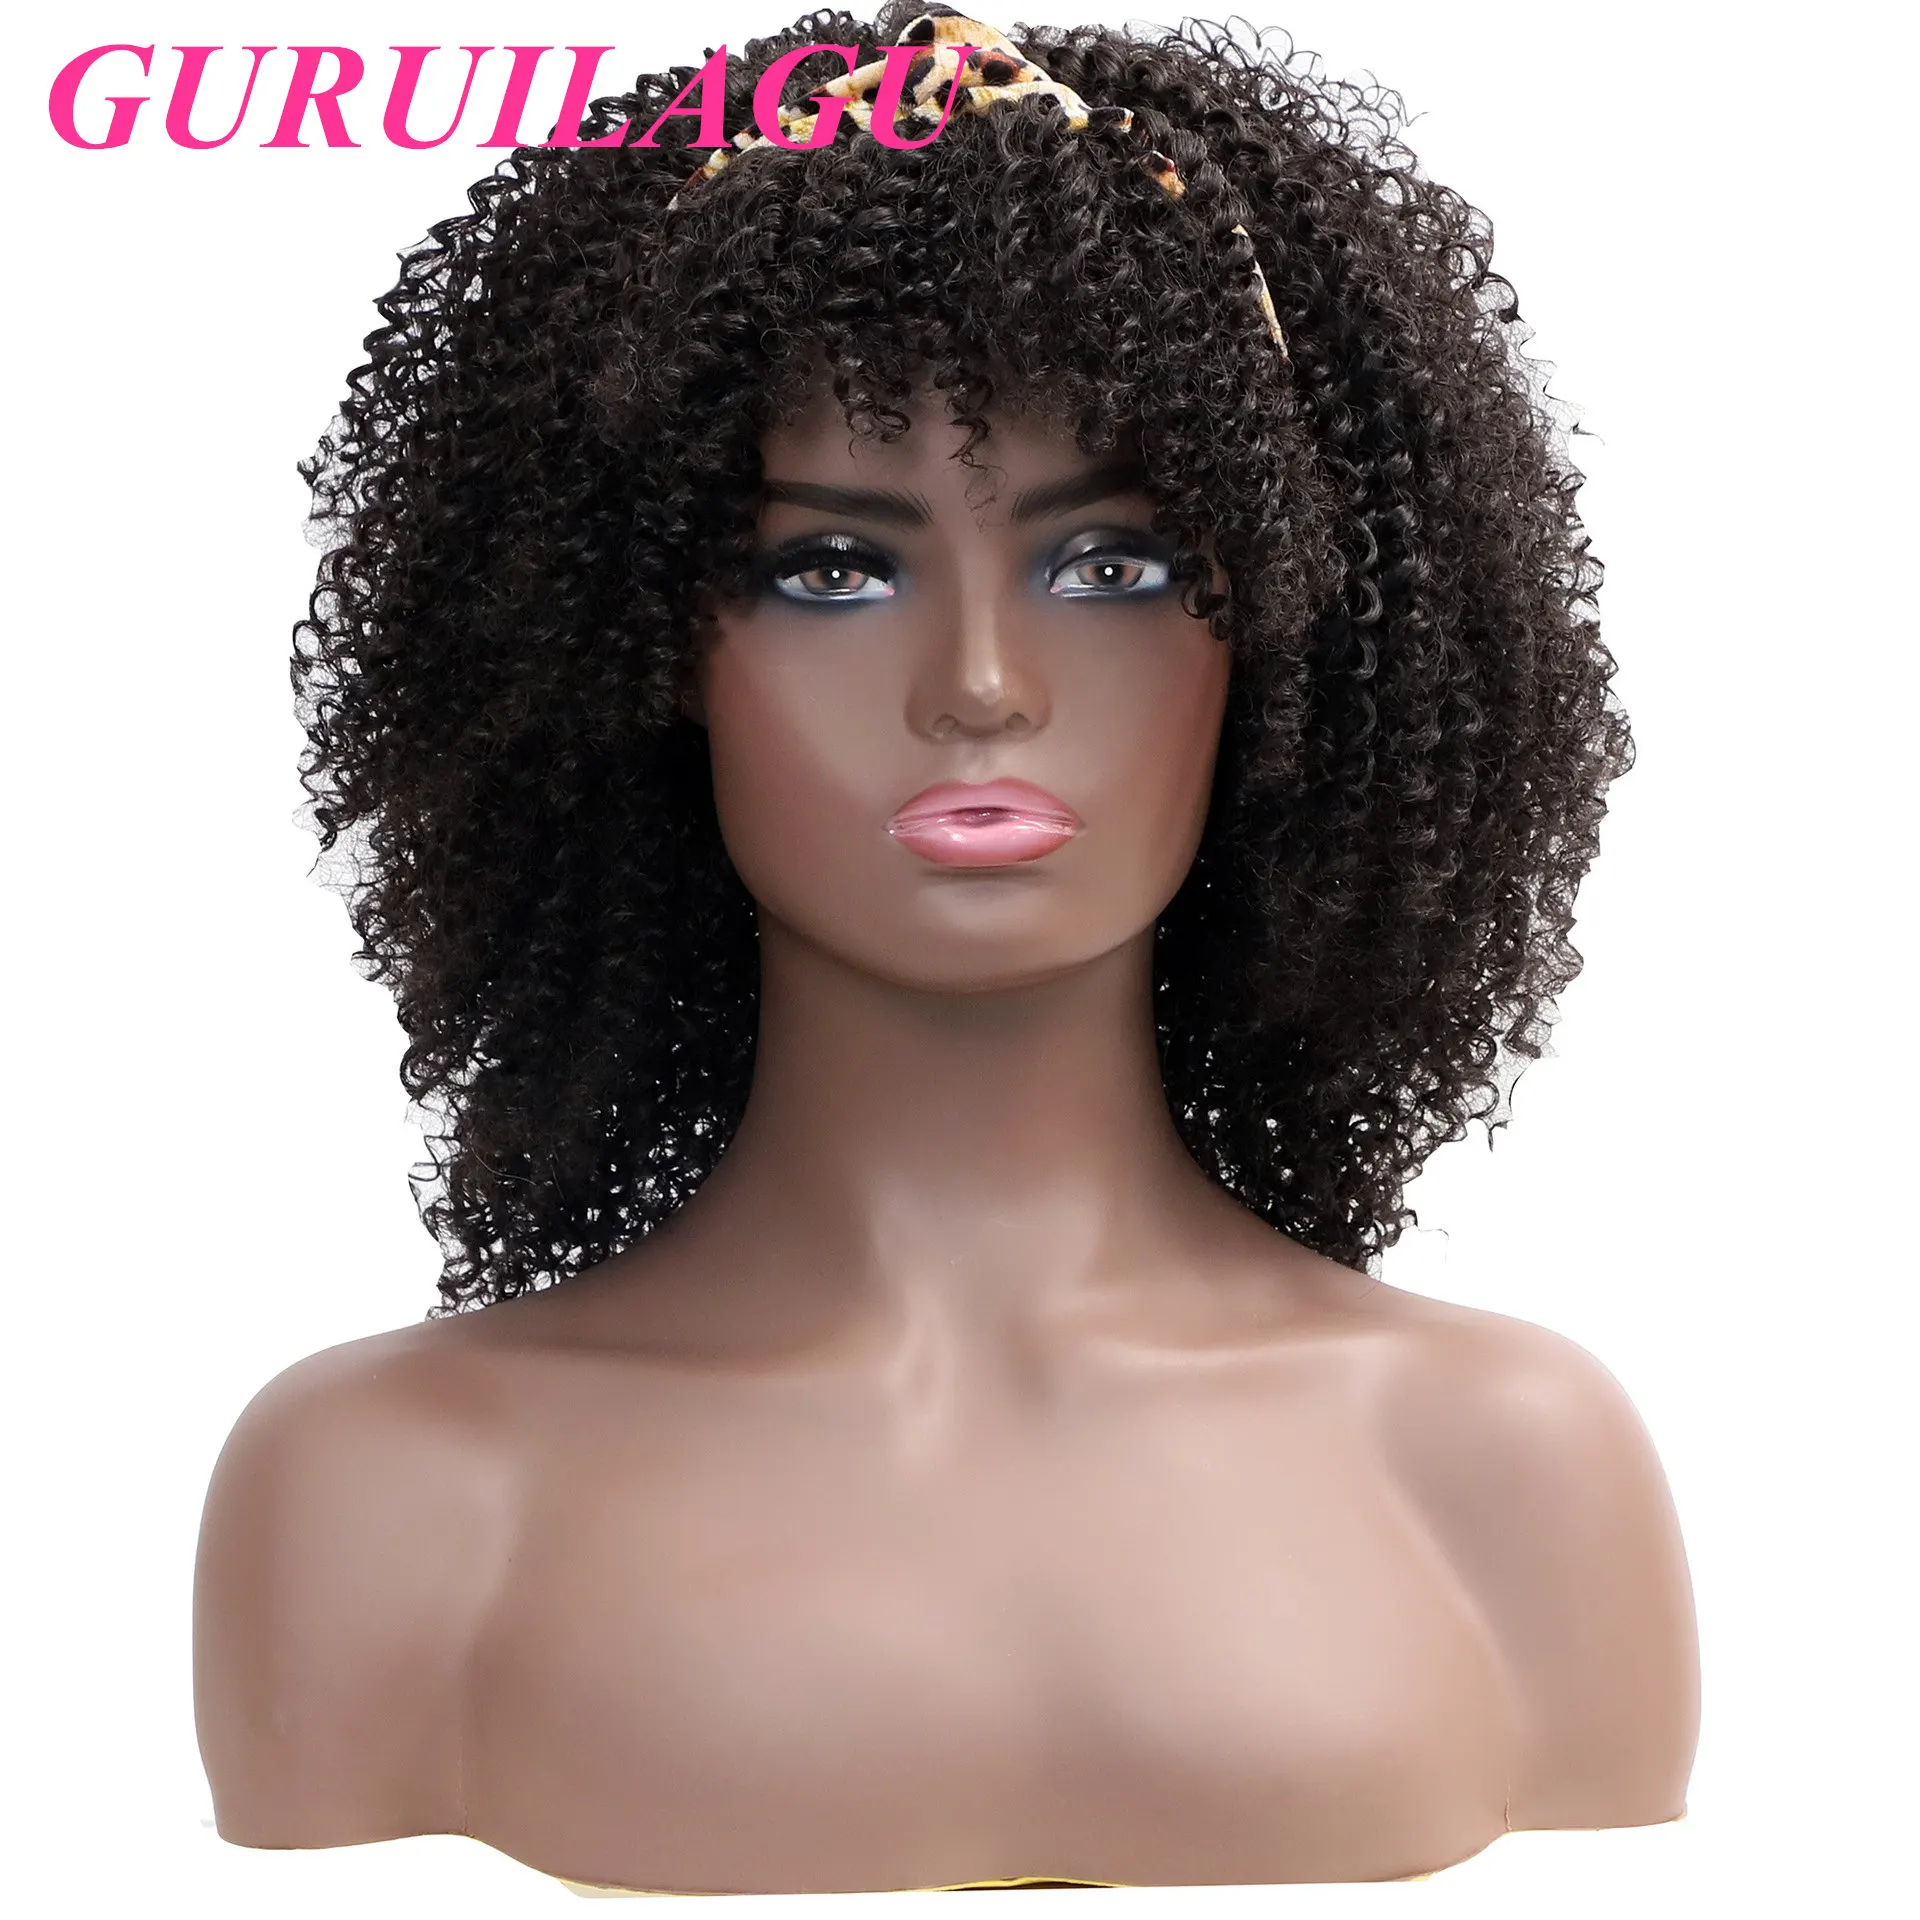 

GURUILAGU Afro Kinky Curly Wigs For Black Women Headband Wig With Bangs Natural Black Short Cosplay Wig Headband Women's Wigs